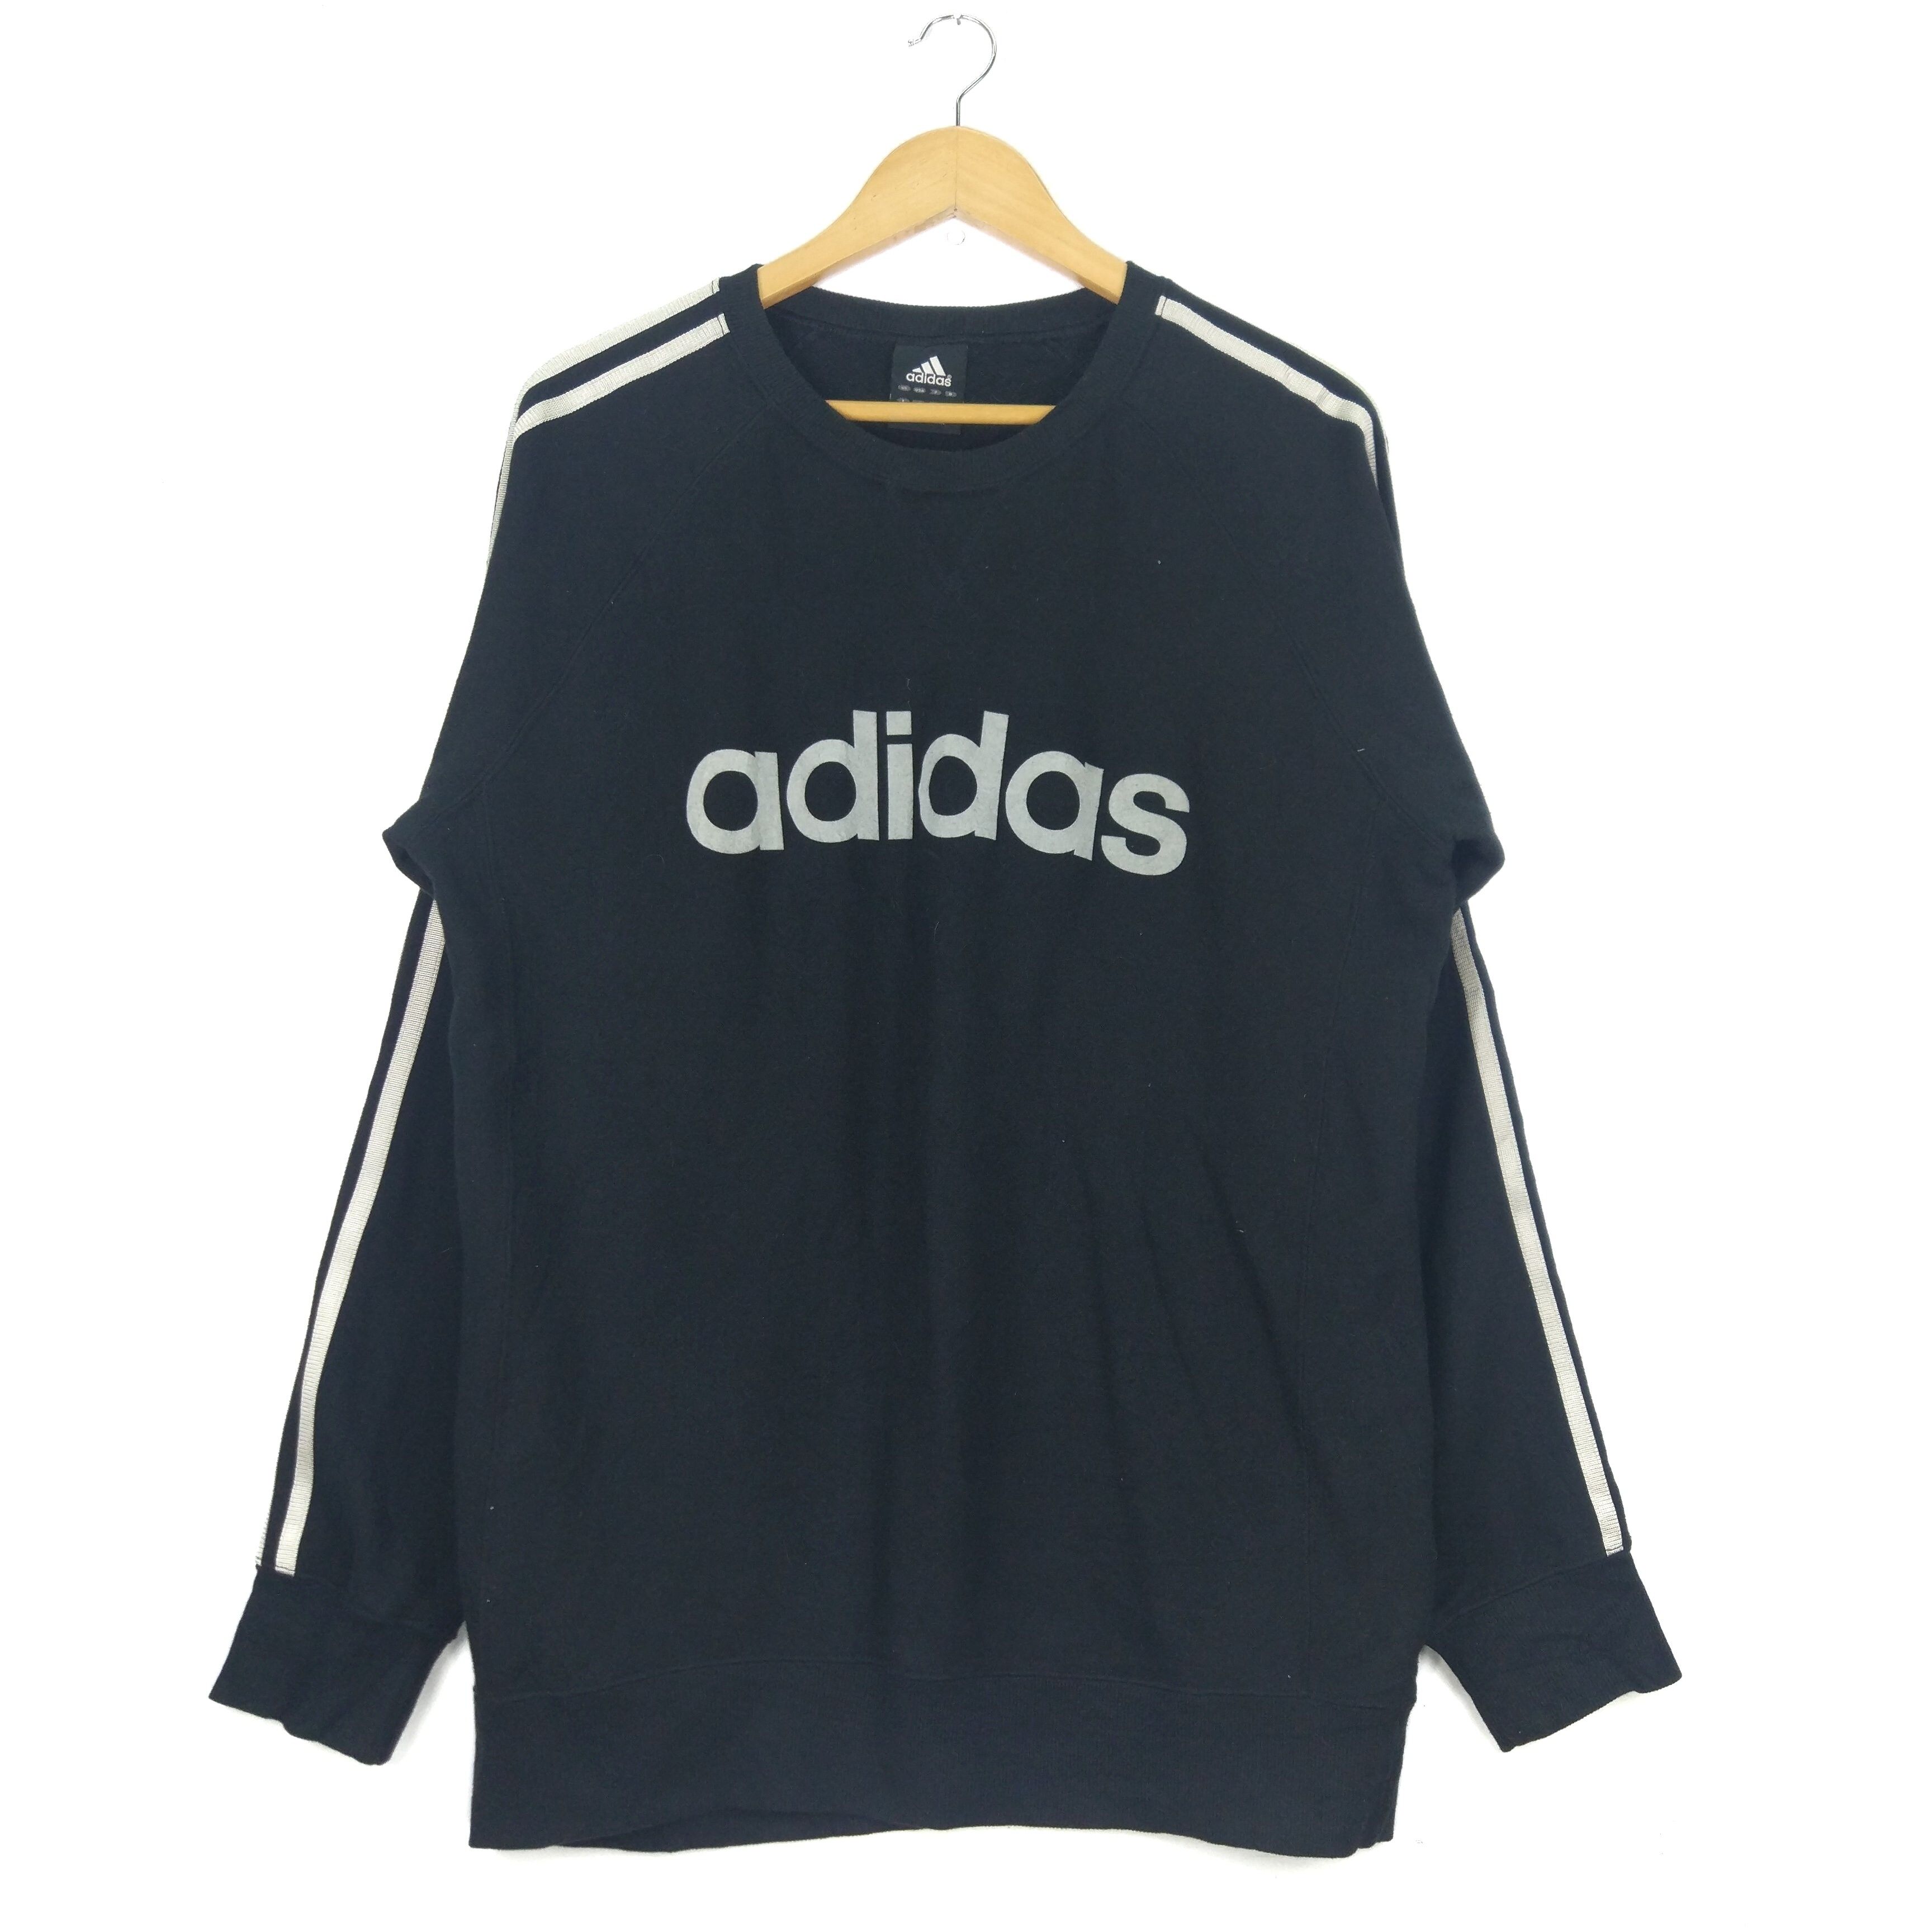 Adidas Big Logo Spellout Crewneck Pullover Jumper Sweatshirt - 1